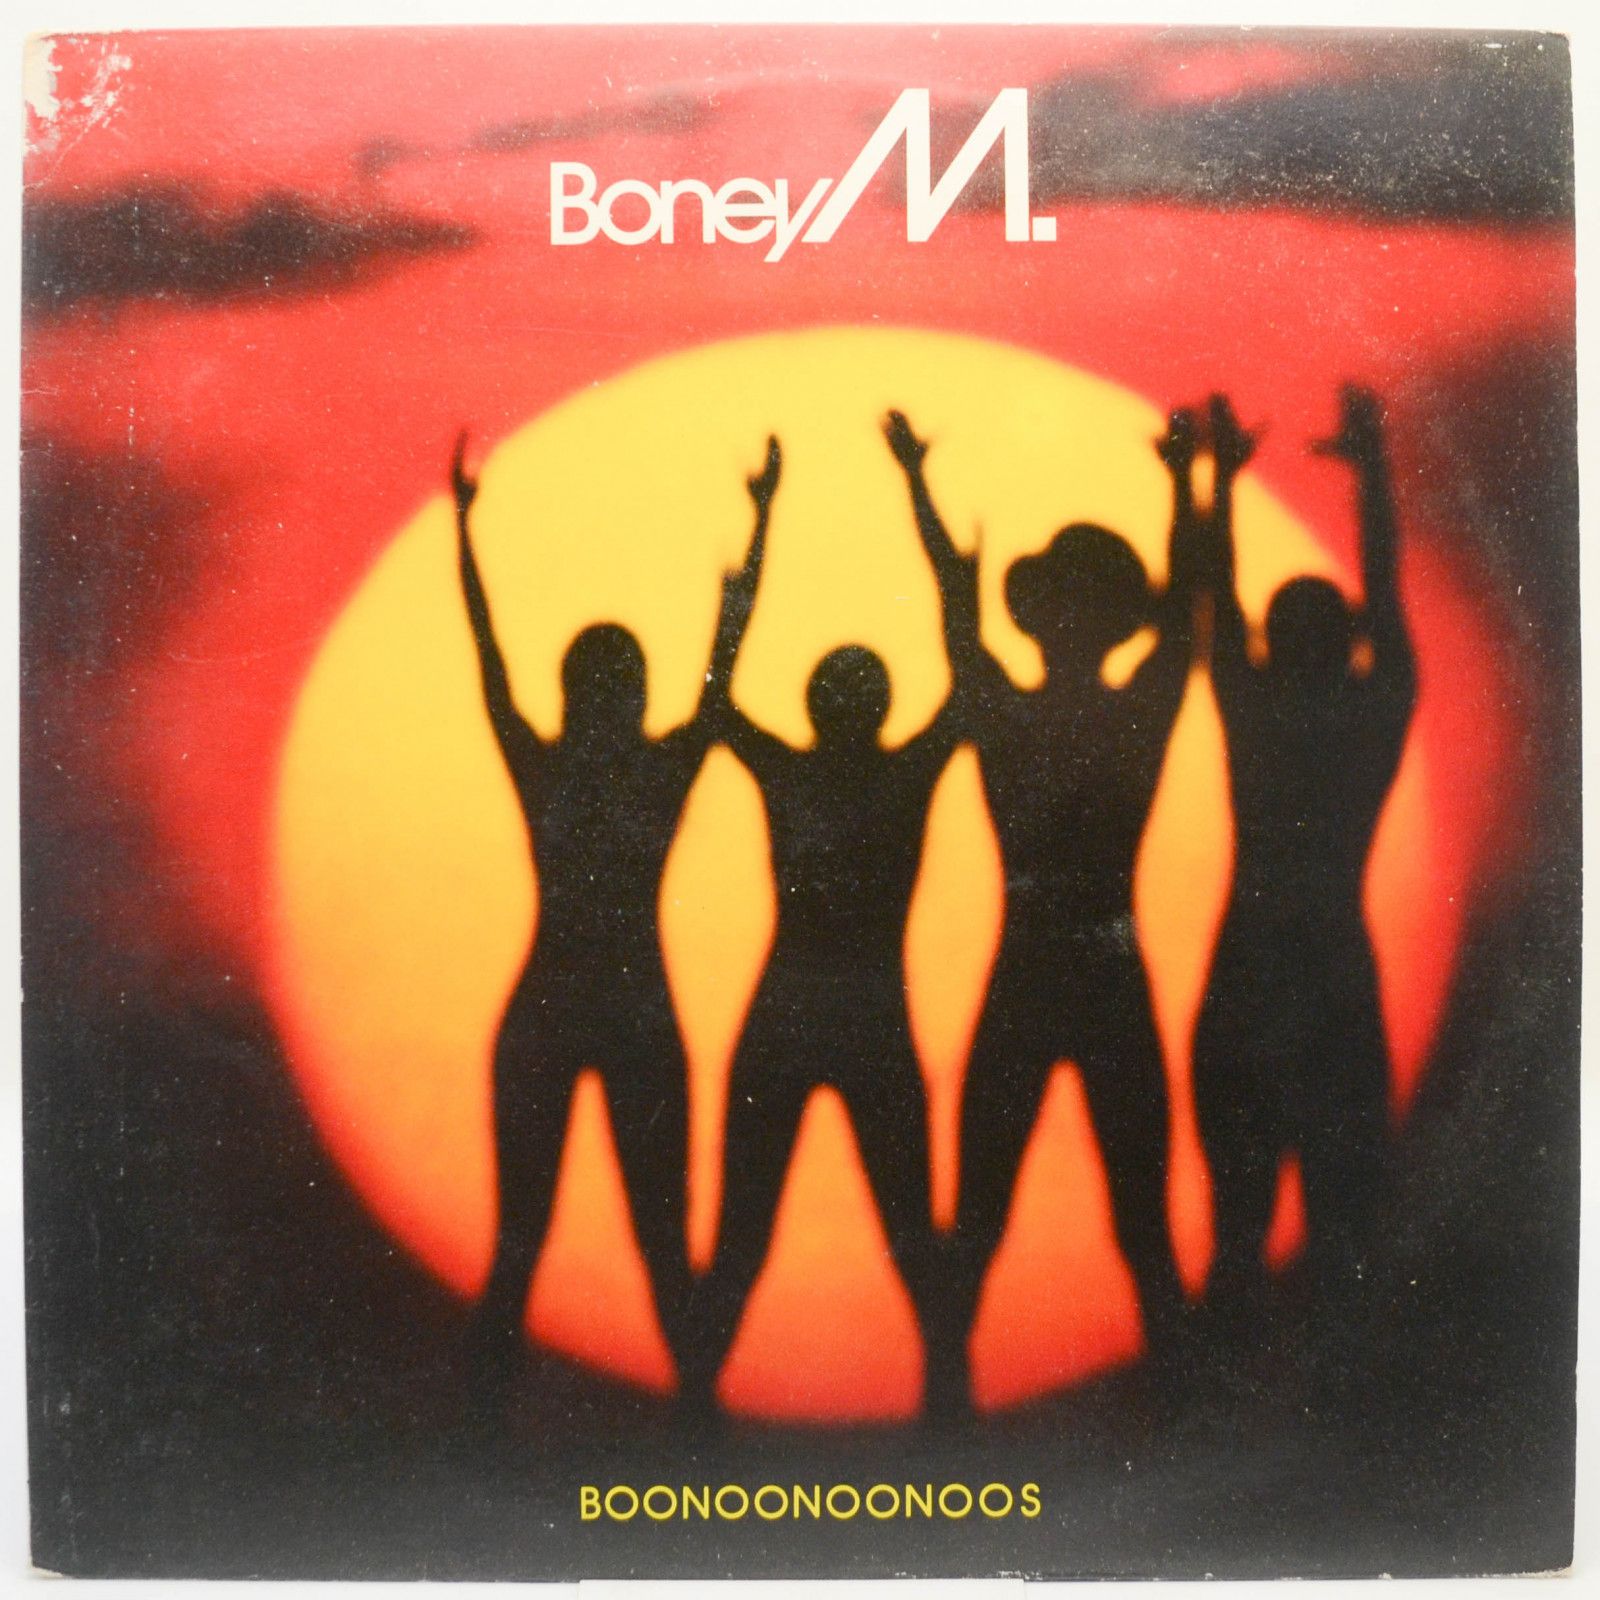 Boney M. — Boonoonoonoos, 1981